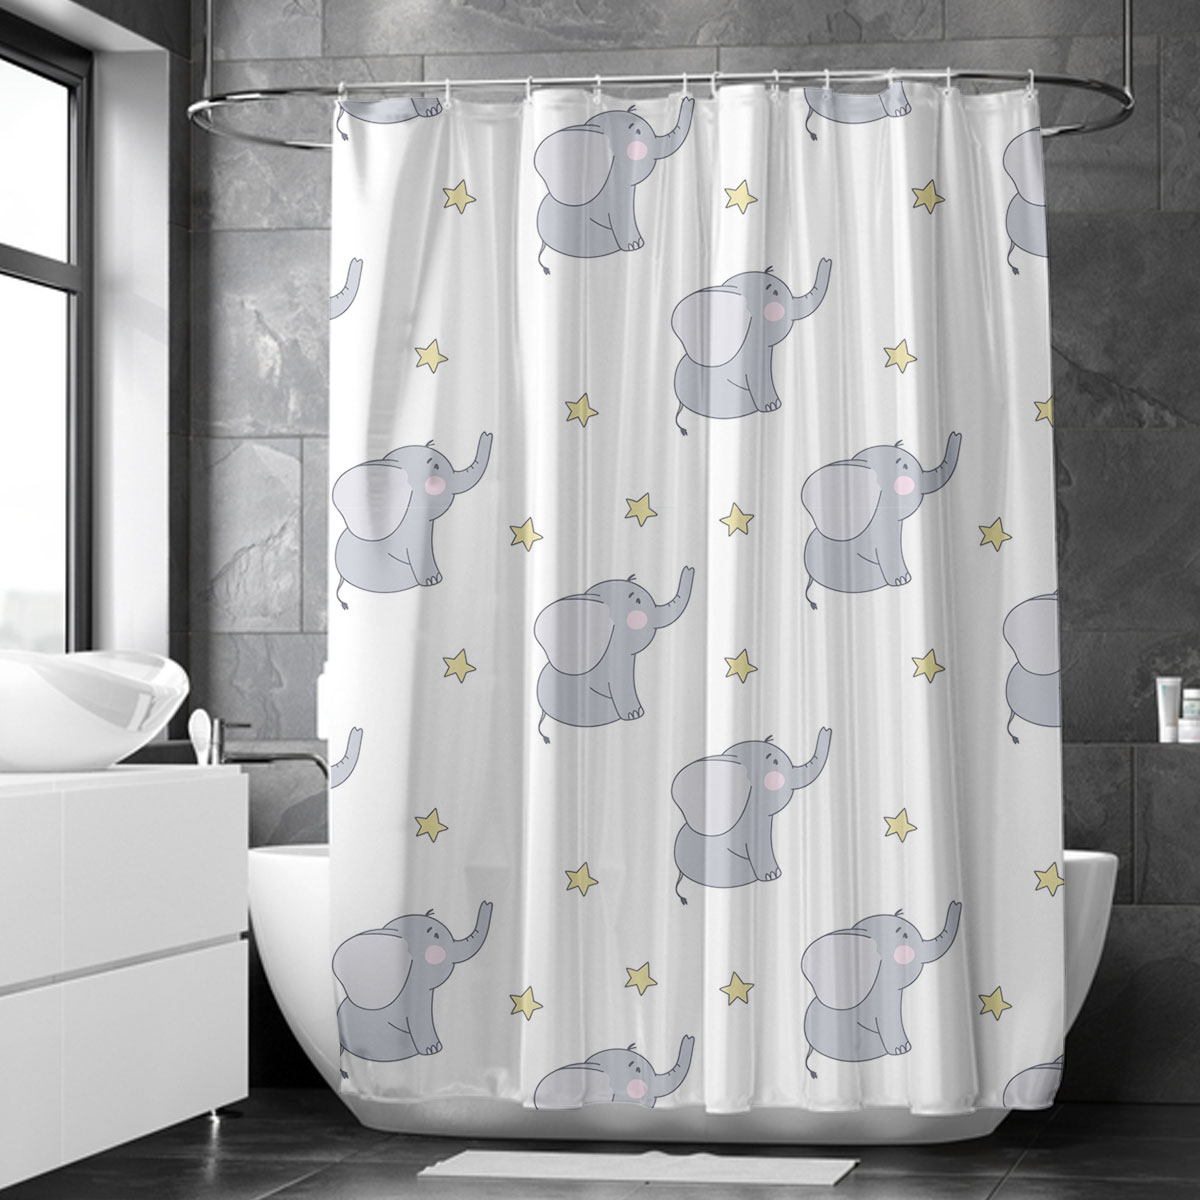 Starboy Asian Elephant Shower Curtain 6